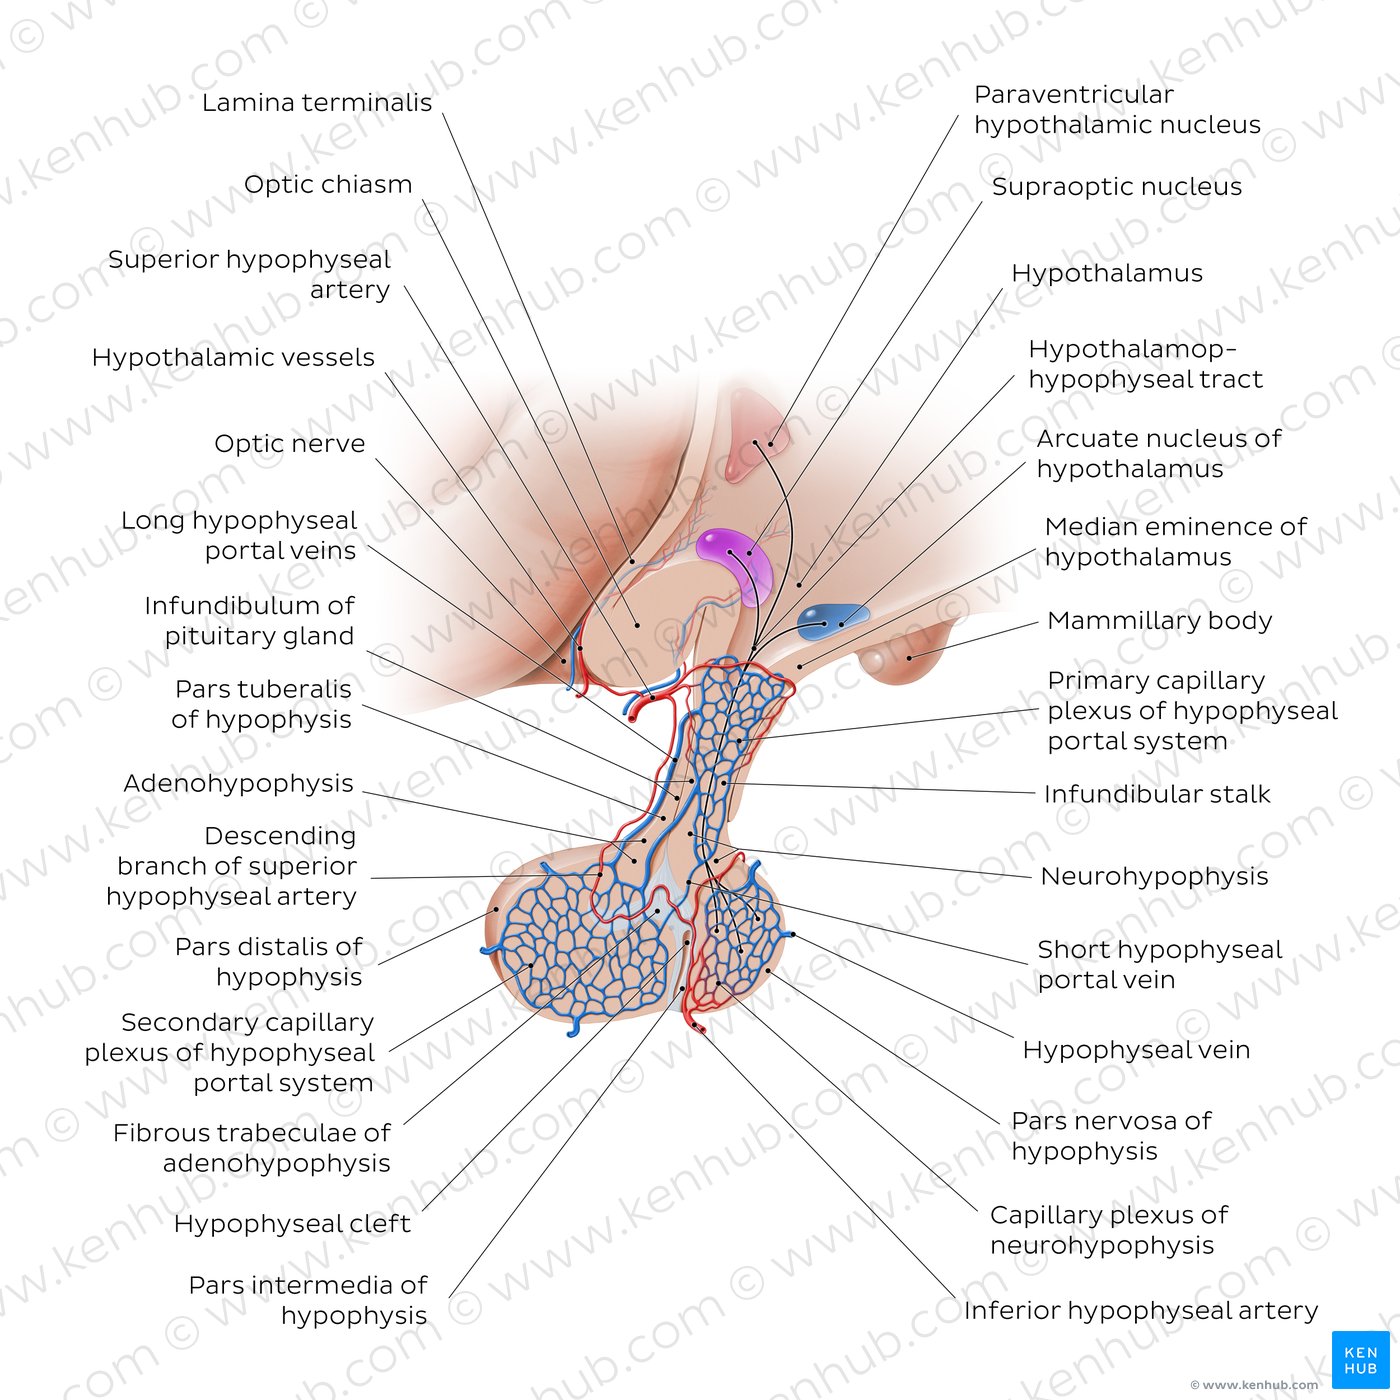 Hypophyseal portal system: Overview